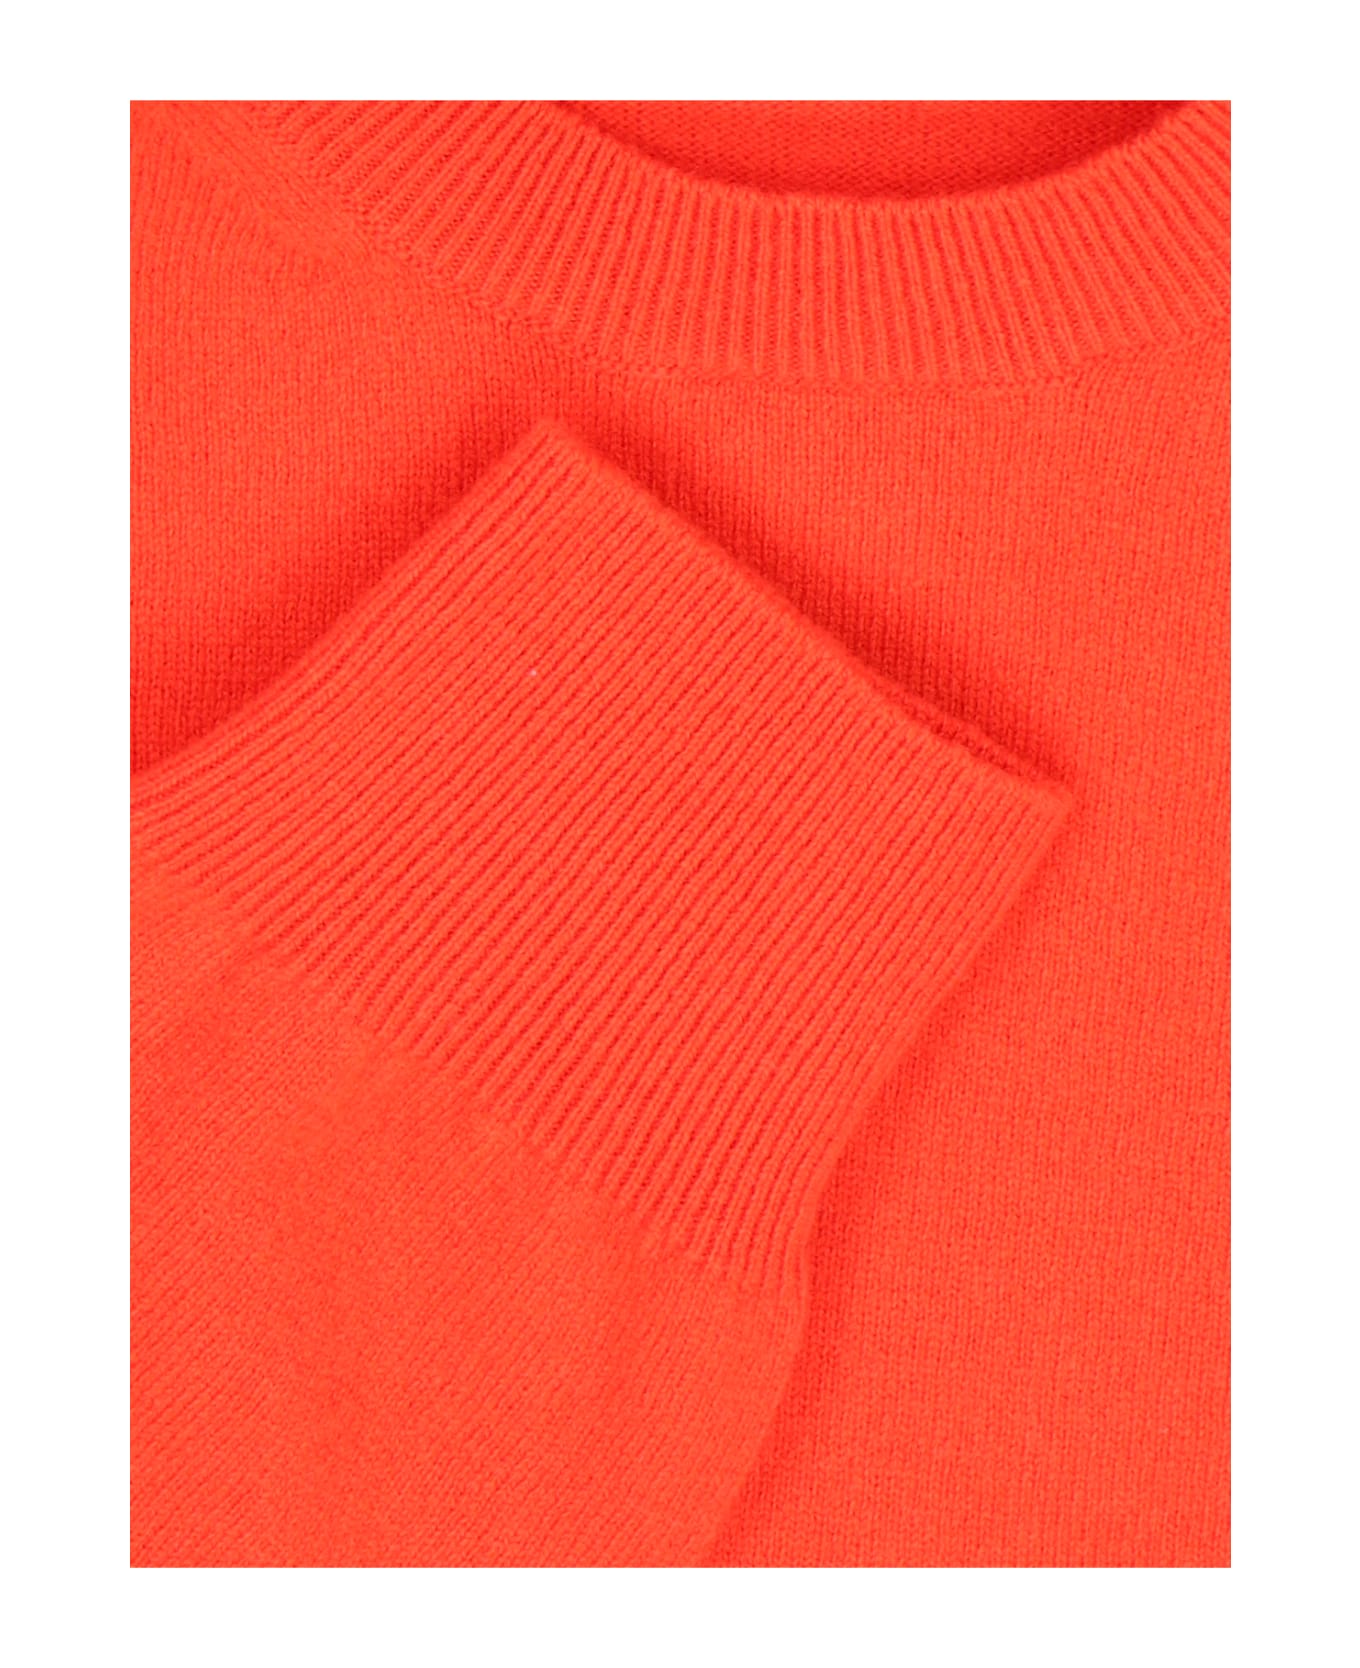 Comme des Garçons Wool Sweater - Orange